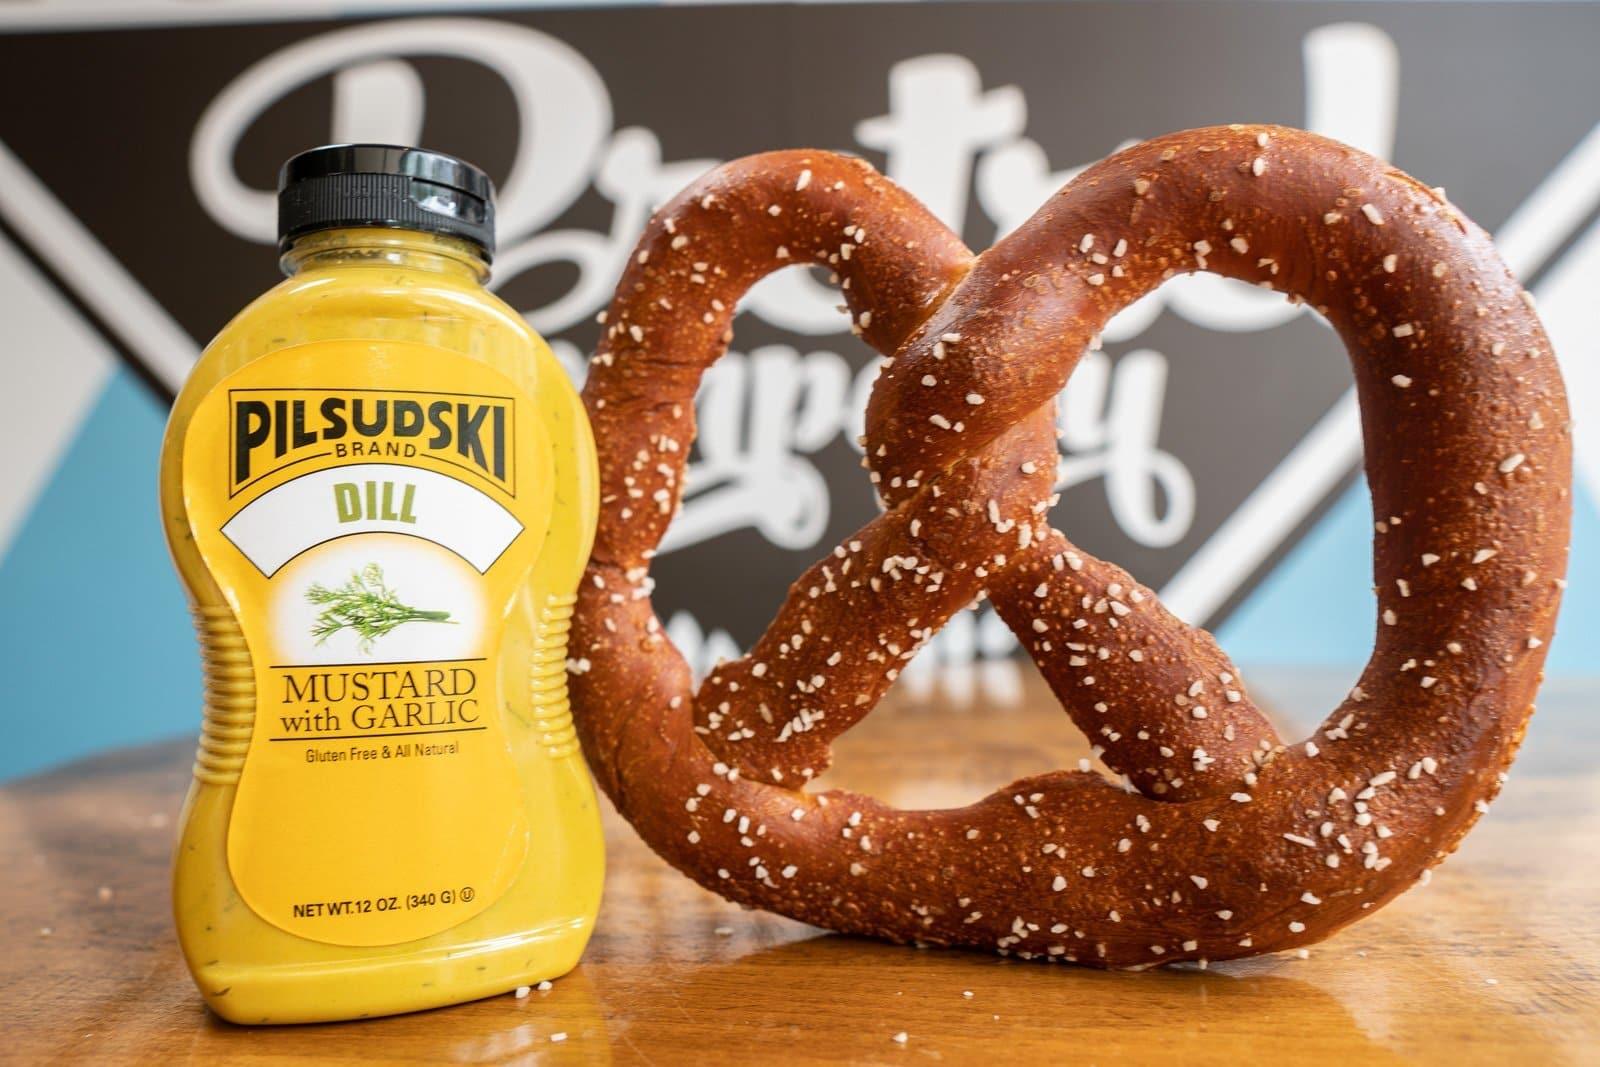 Pilsudski Dill Mustard - The Pretzel Company